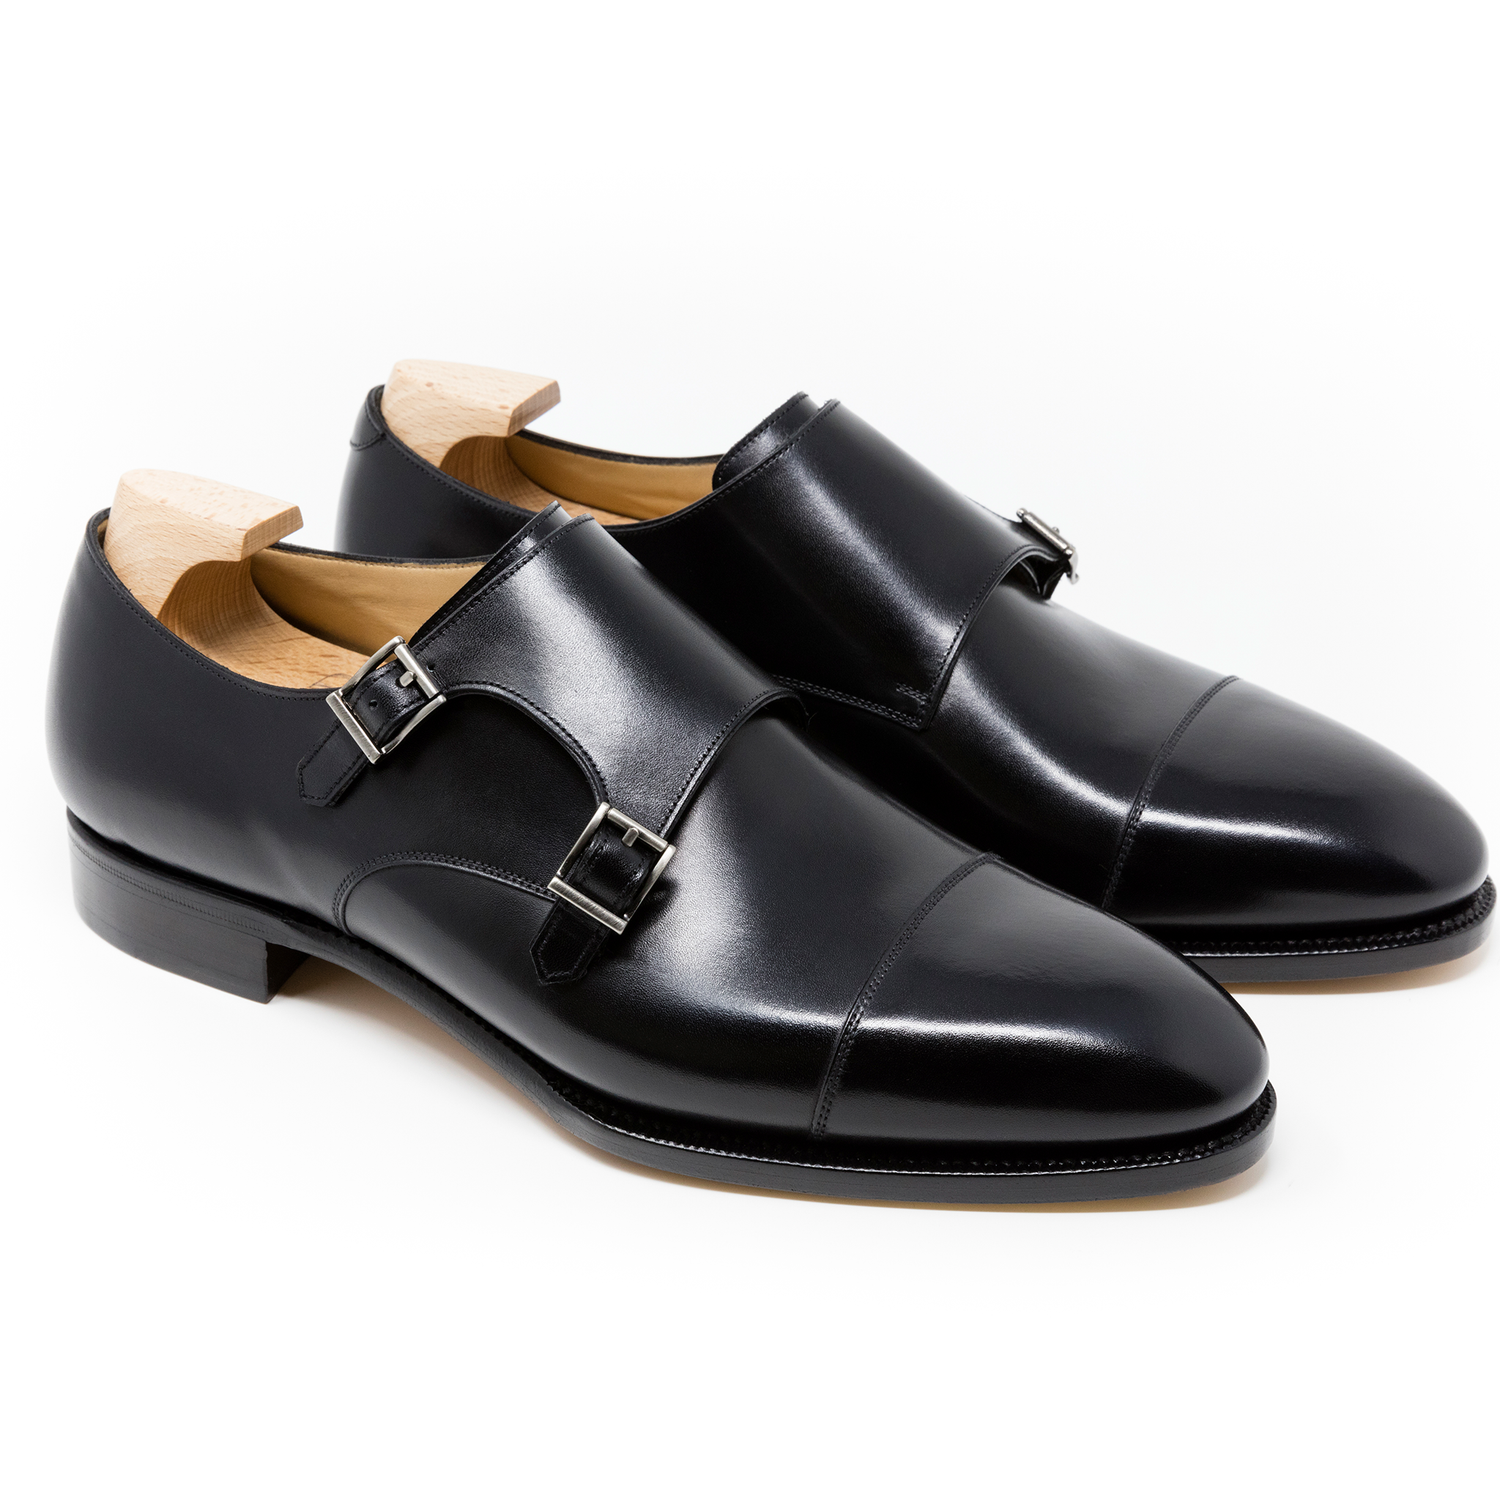 TLB Mallorca leather shoes 118 / GOYA / BOXCALF BLACK